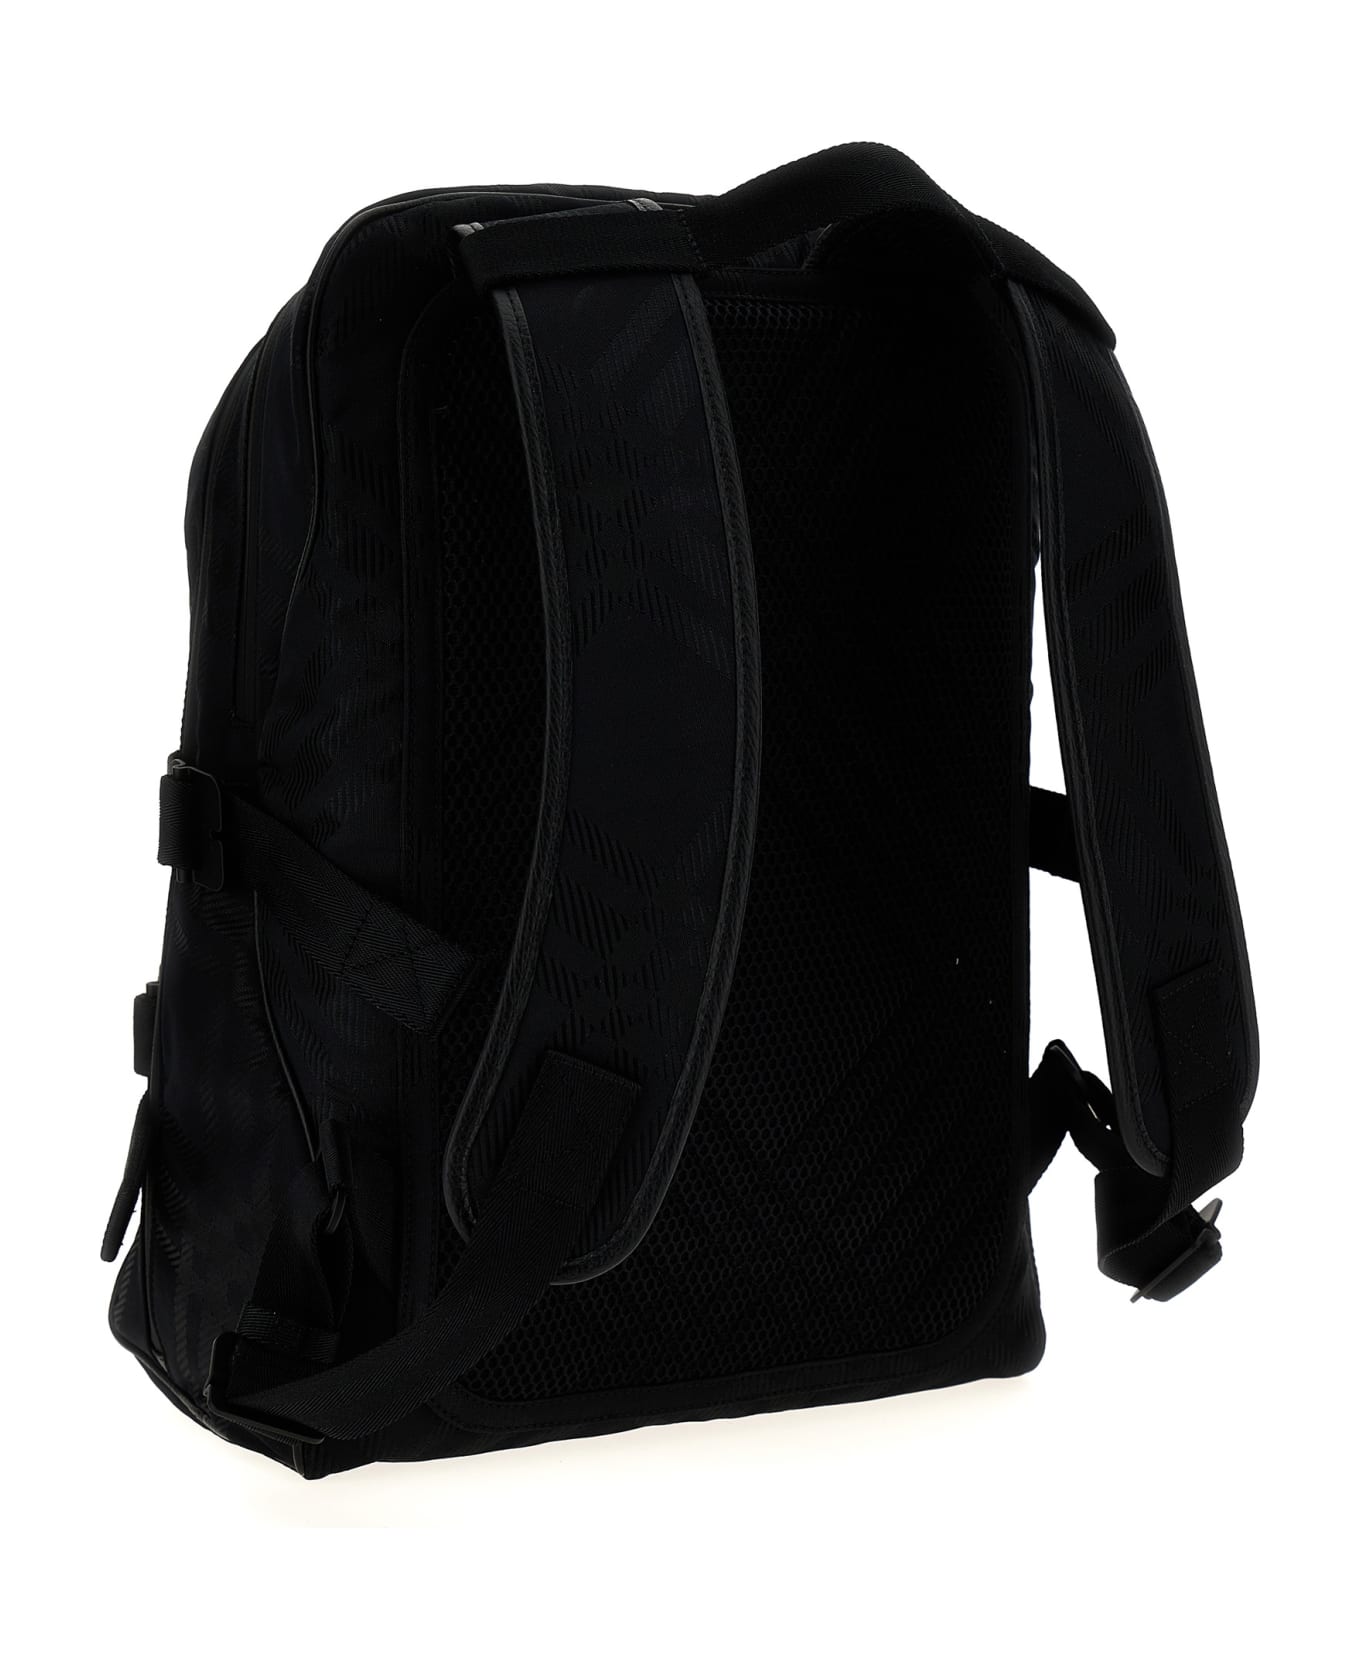 Burberry Check Jacquard Backpack - Black  